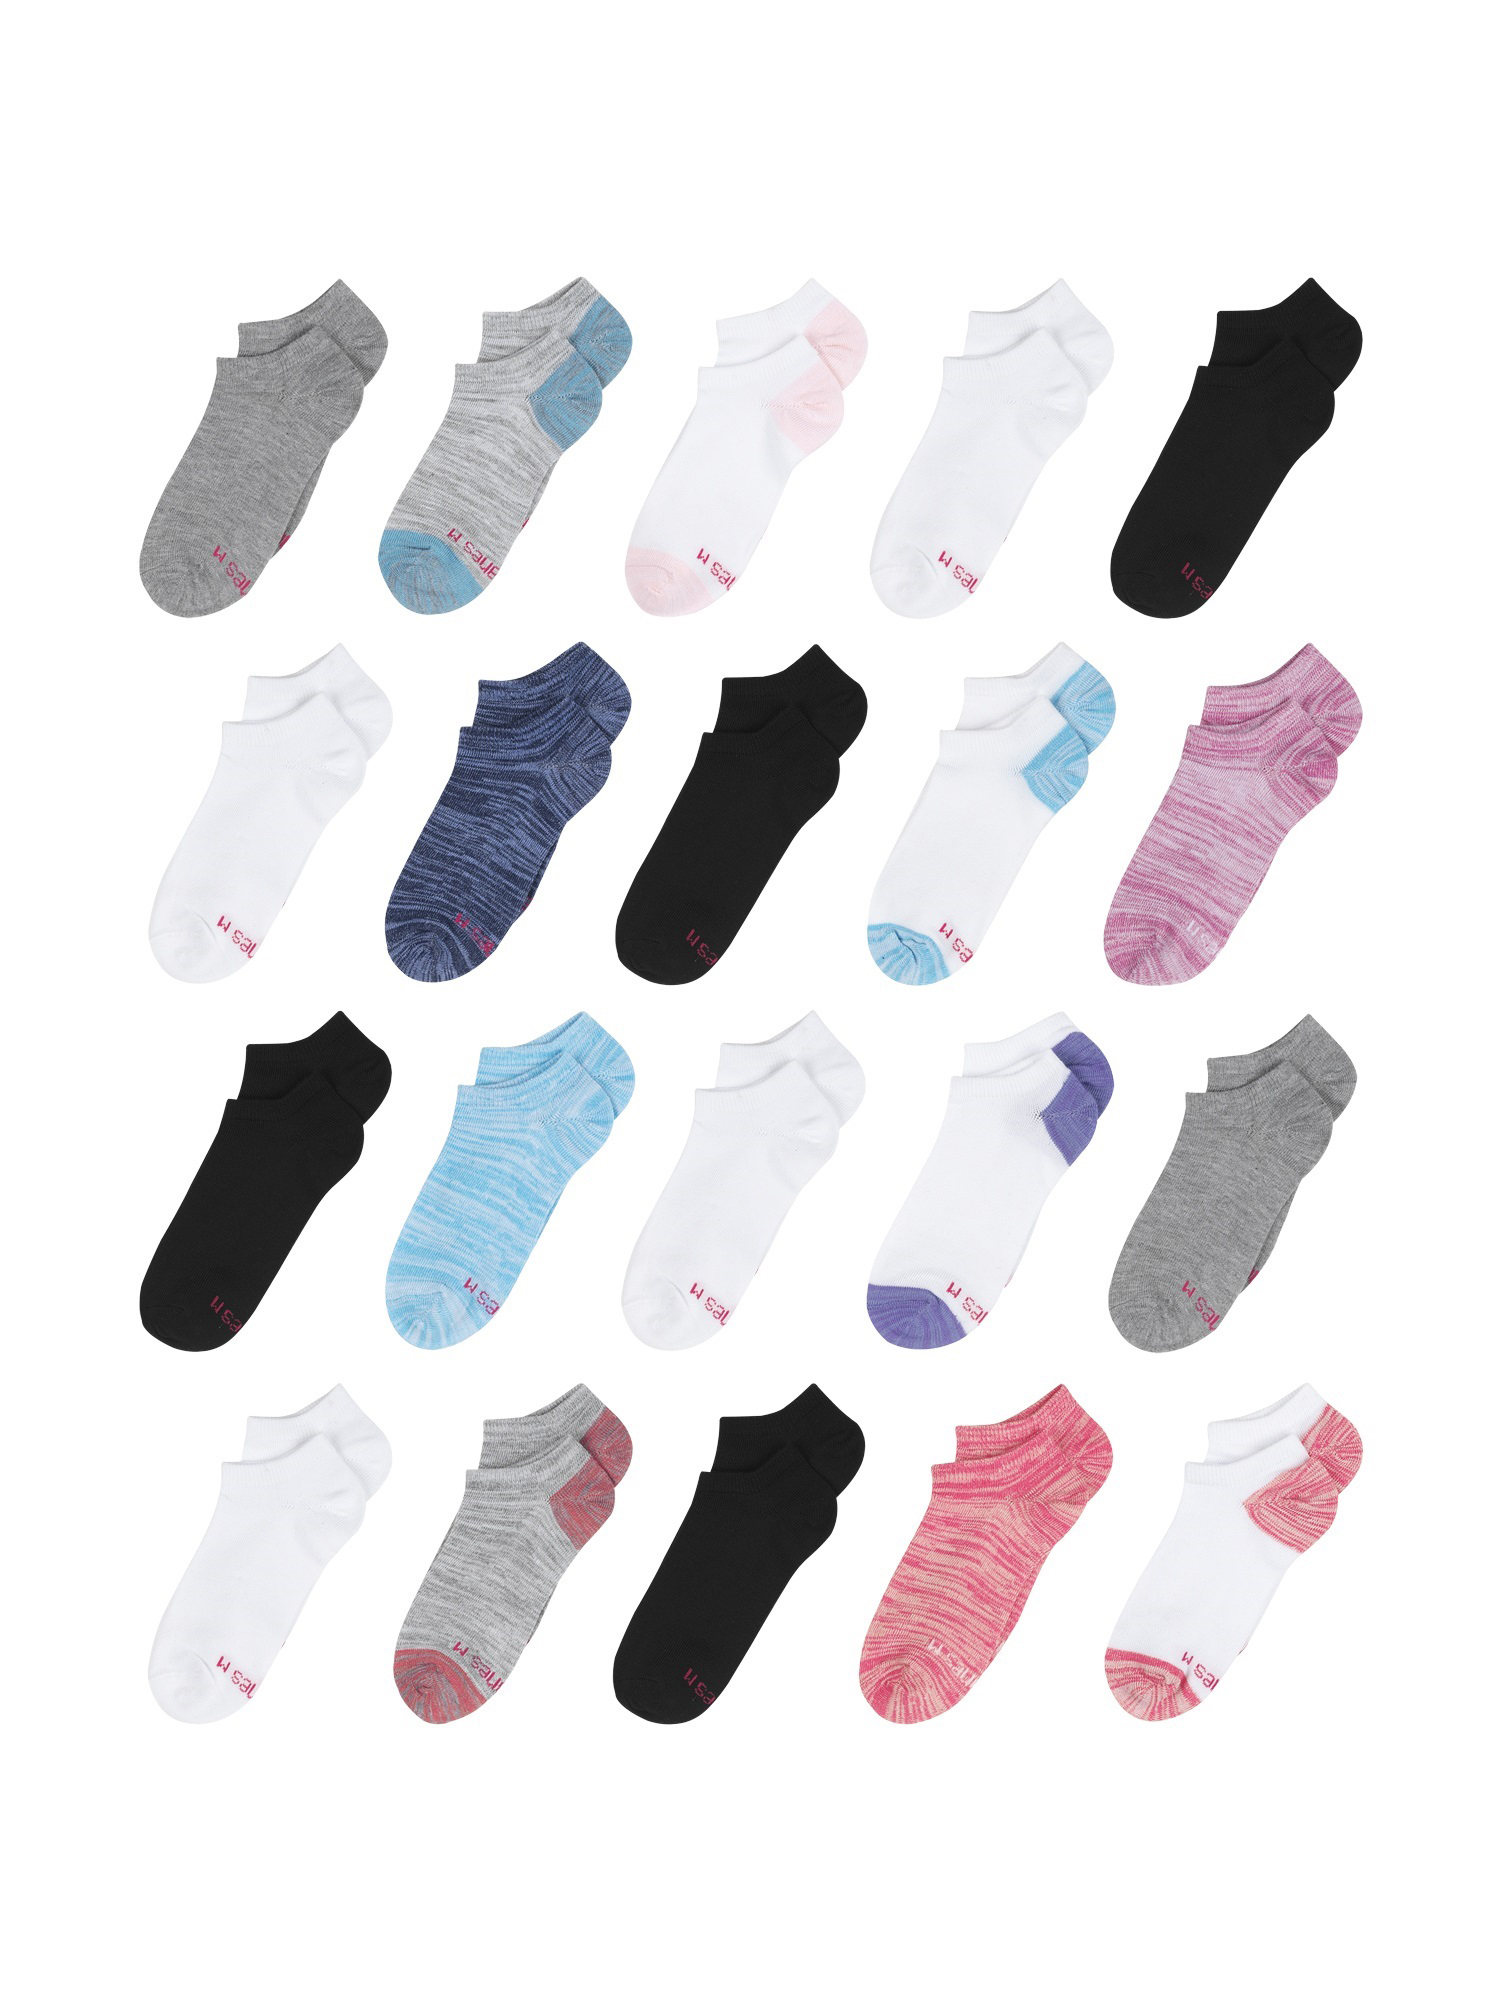 Hanes Girls' Super No Show Socks, 20 Pack, Sizes S-L - image 1 of 4